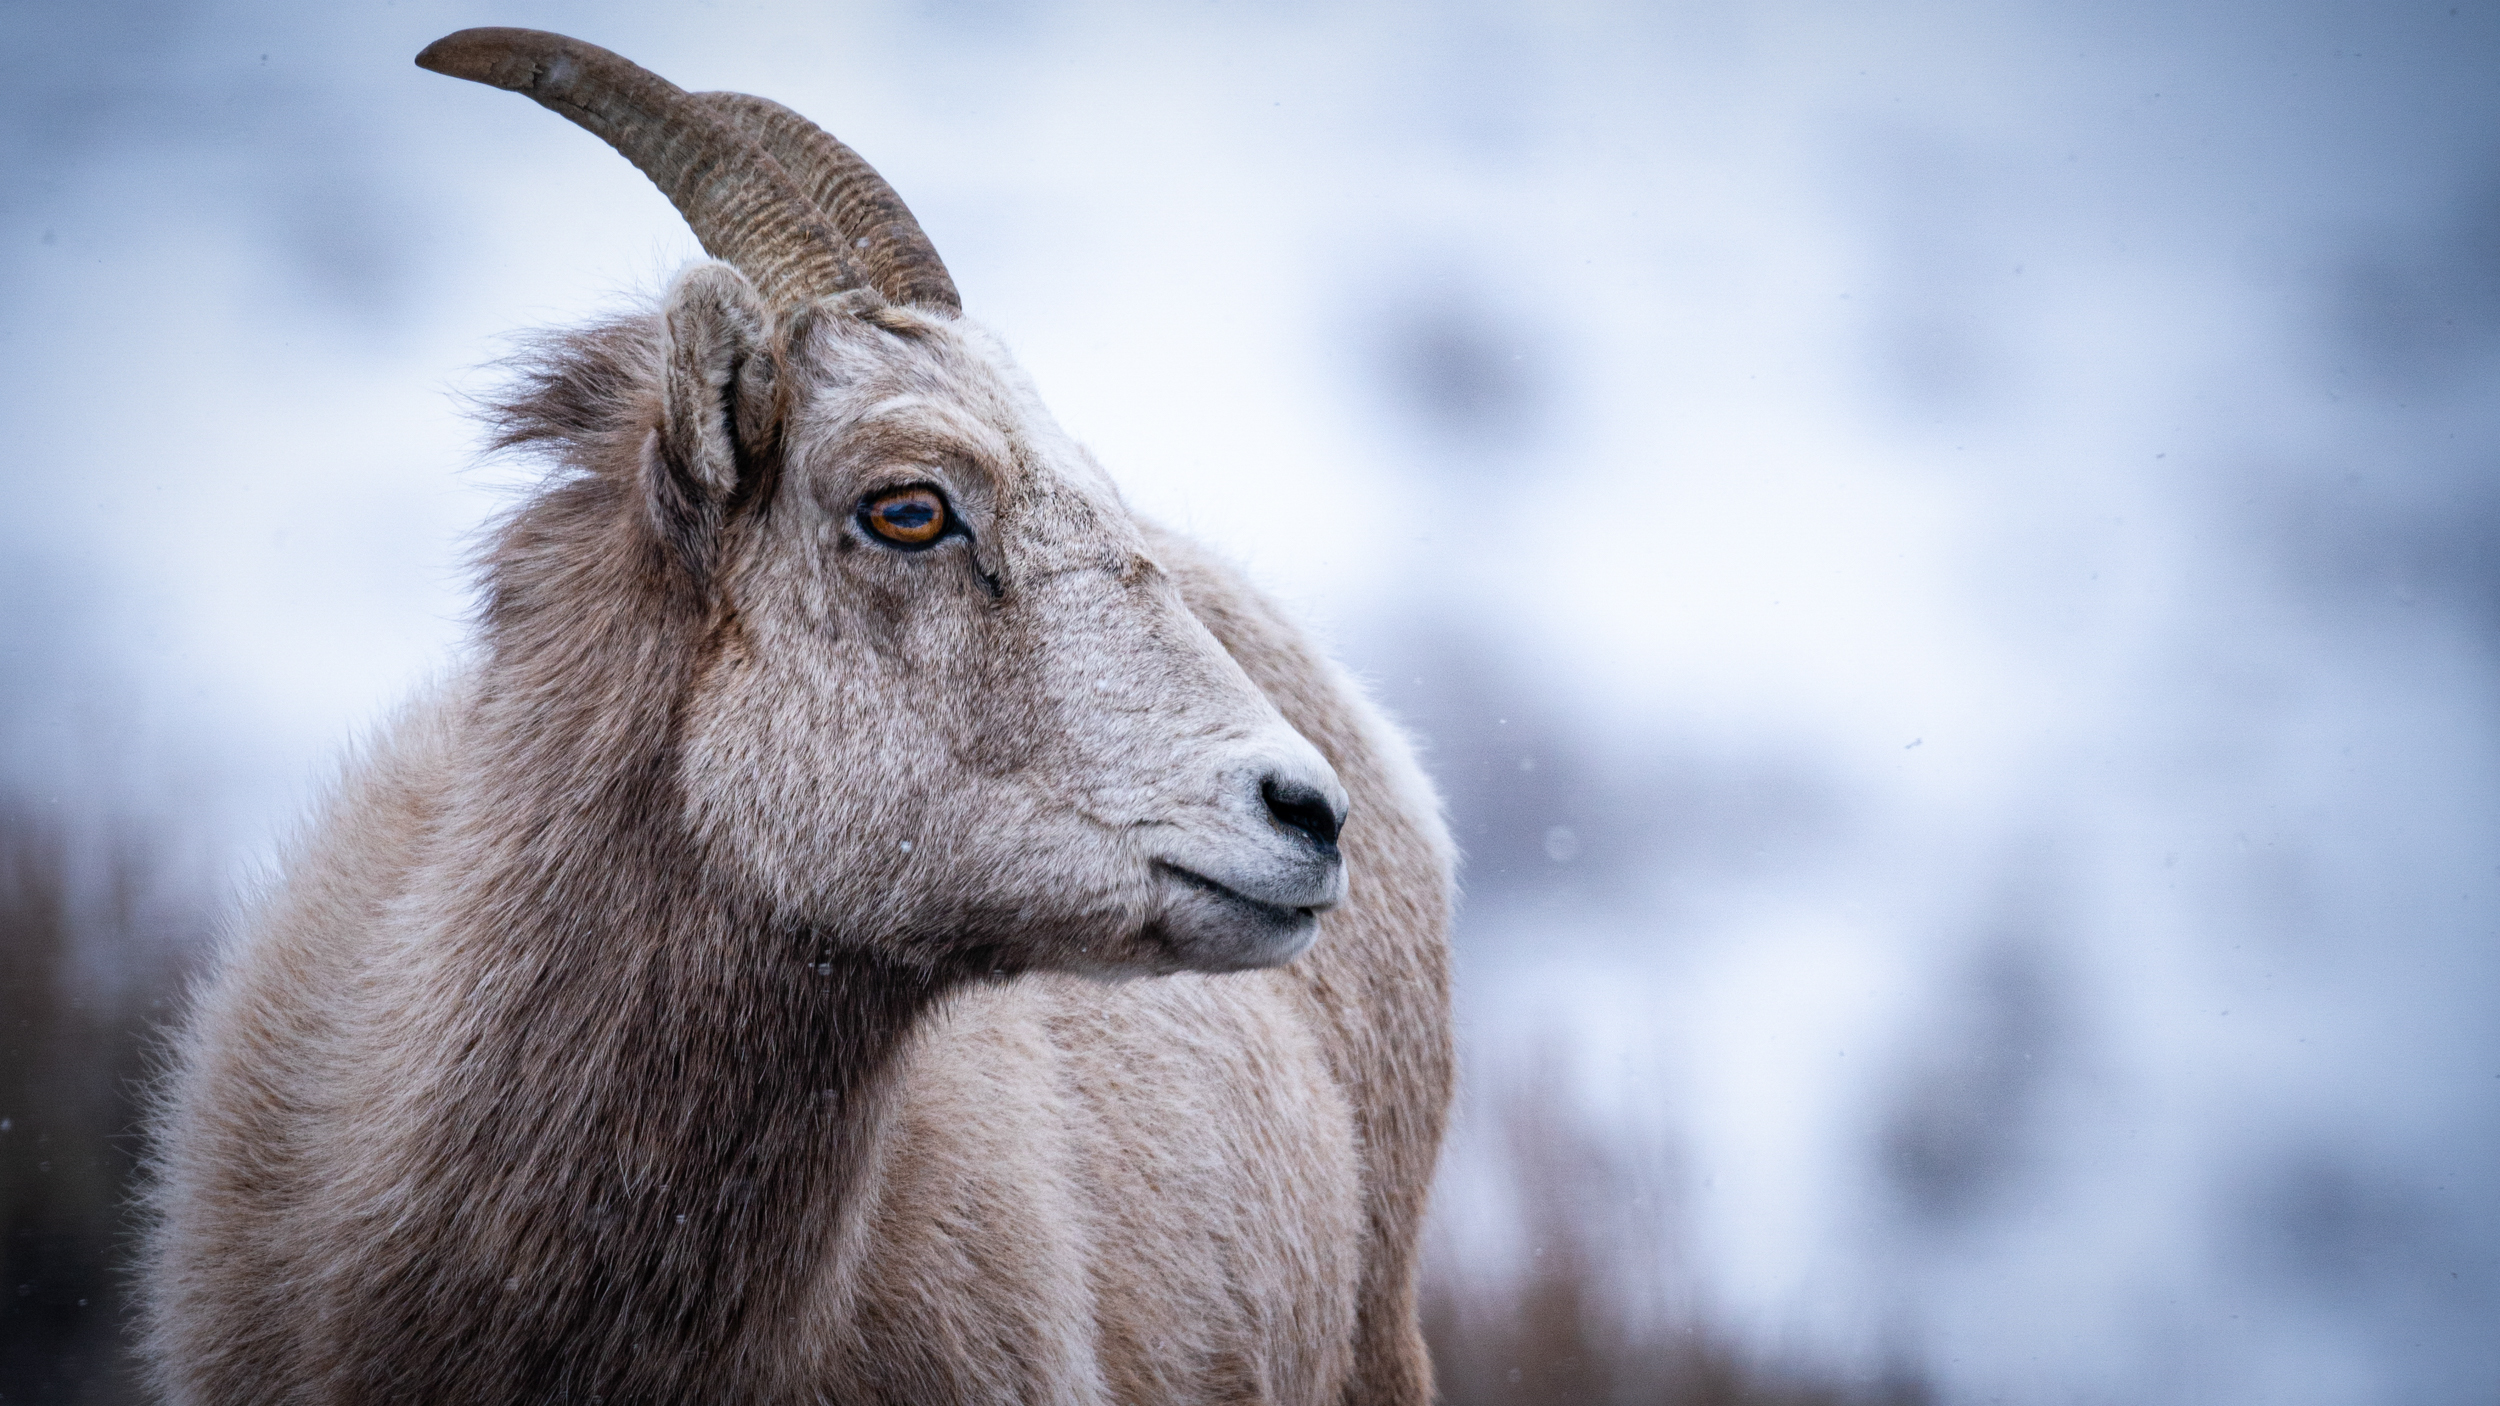 A bighorn sheep in the snow